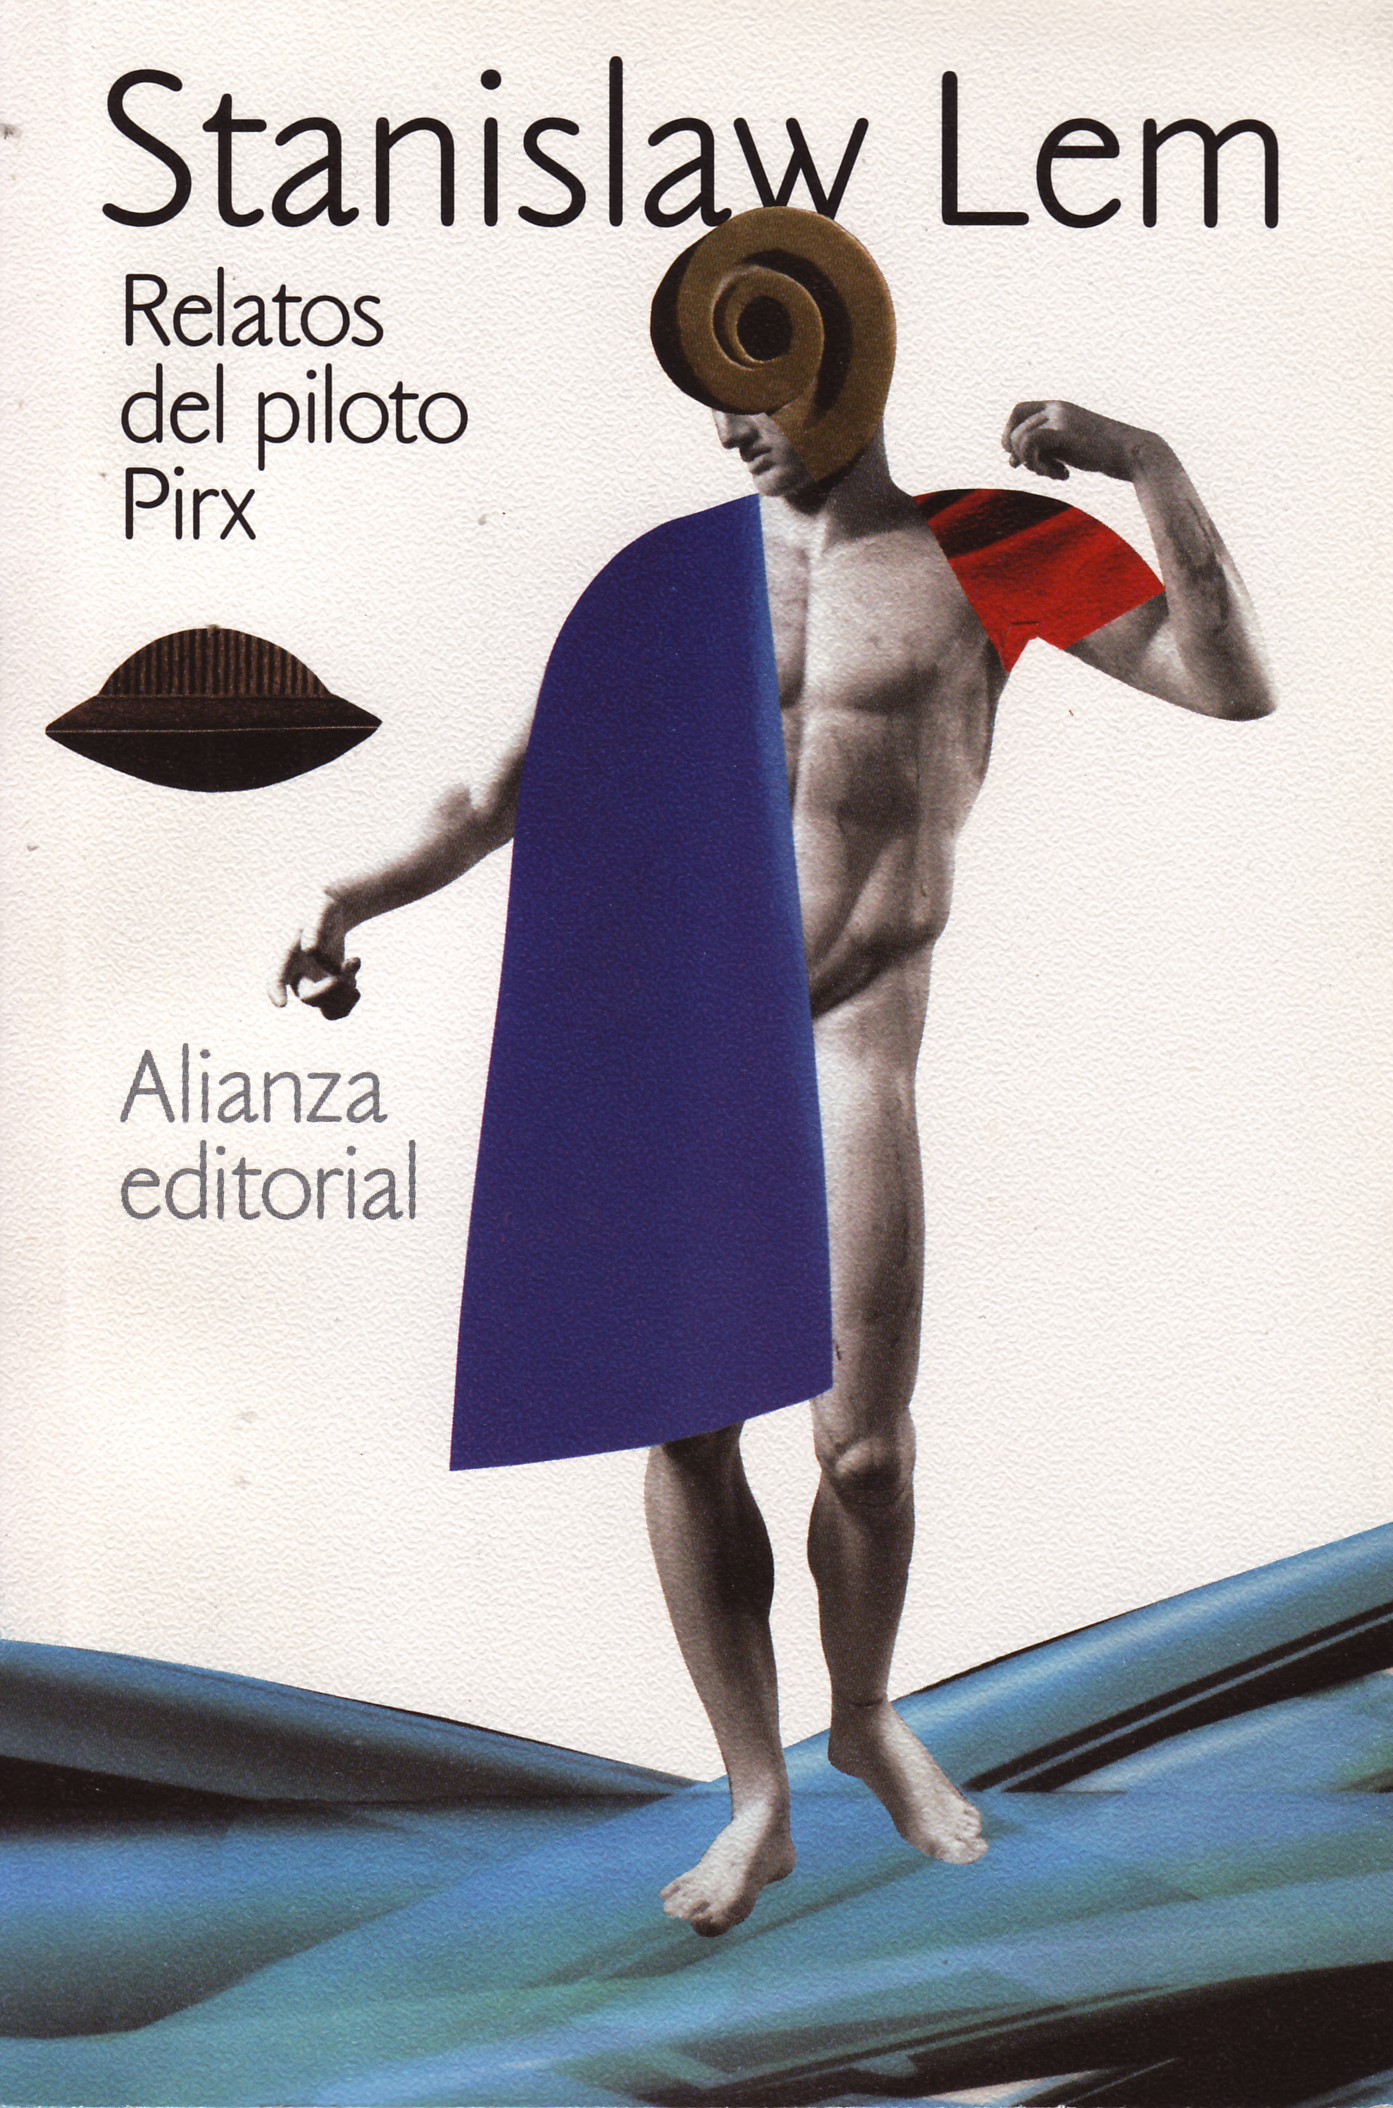 Pirx the Pilot Spanish Alianza Editorial 2013 (v1).jpg